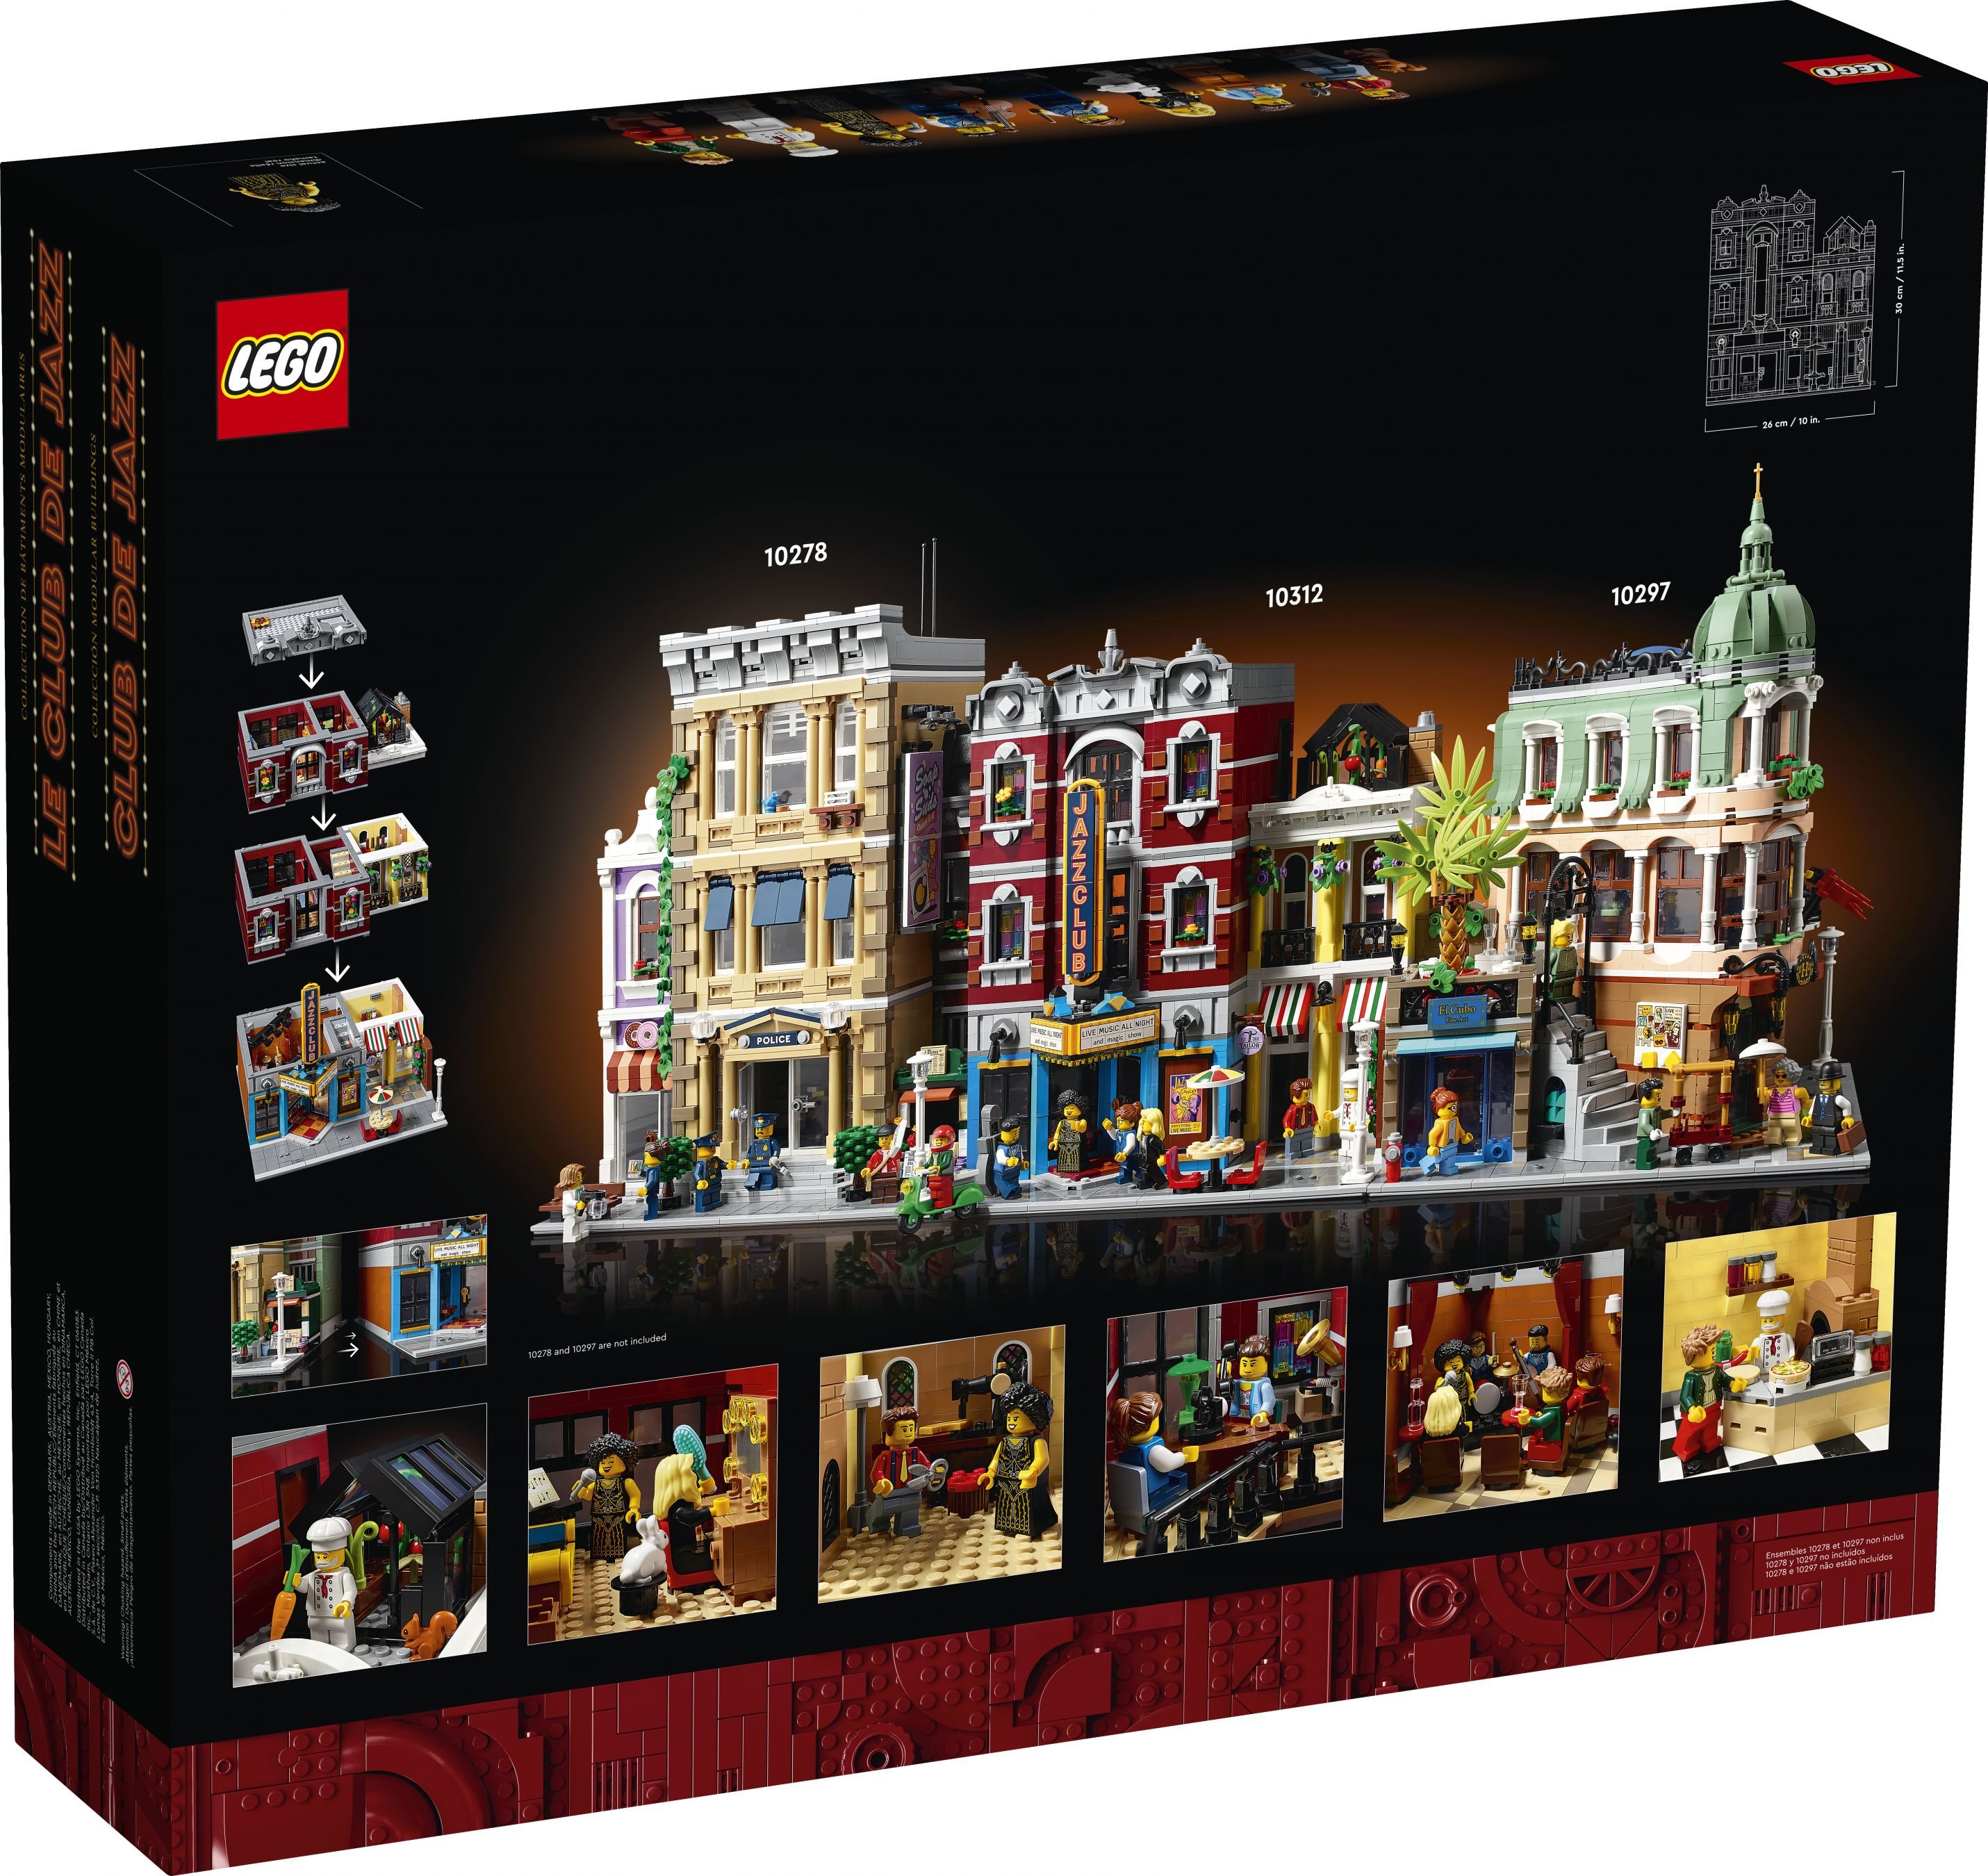 LEGO Advanced Models 10312 Jazzclub LEGO_10312_Box5_v39.jpg